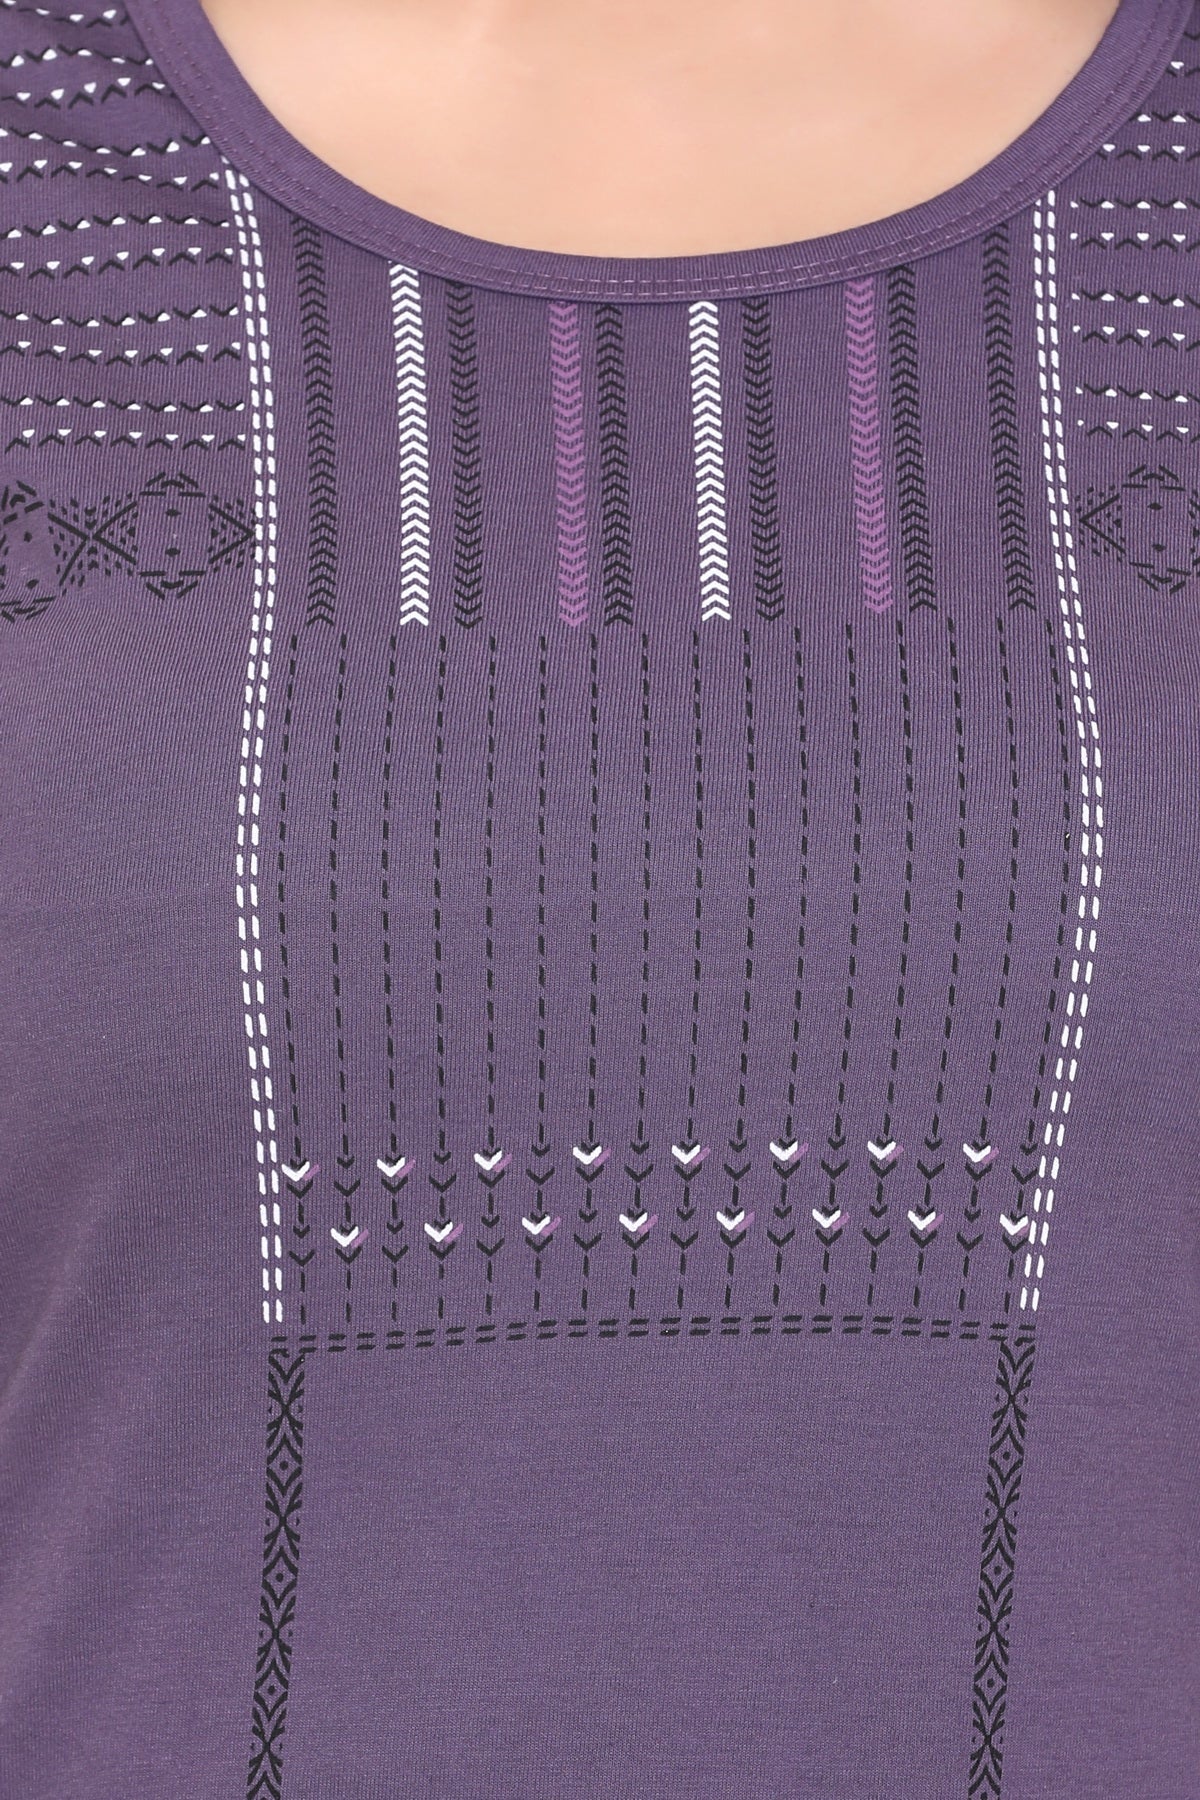 Cotton Printed Long T-shirts For Women Half Sleeve - Purple